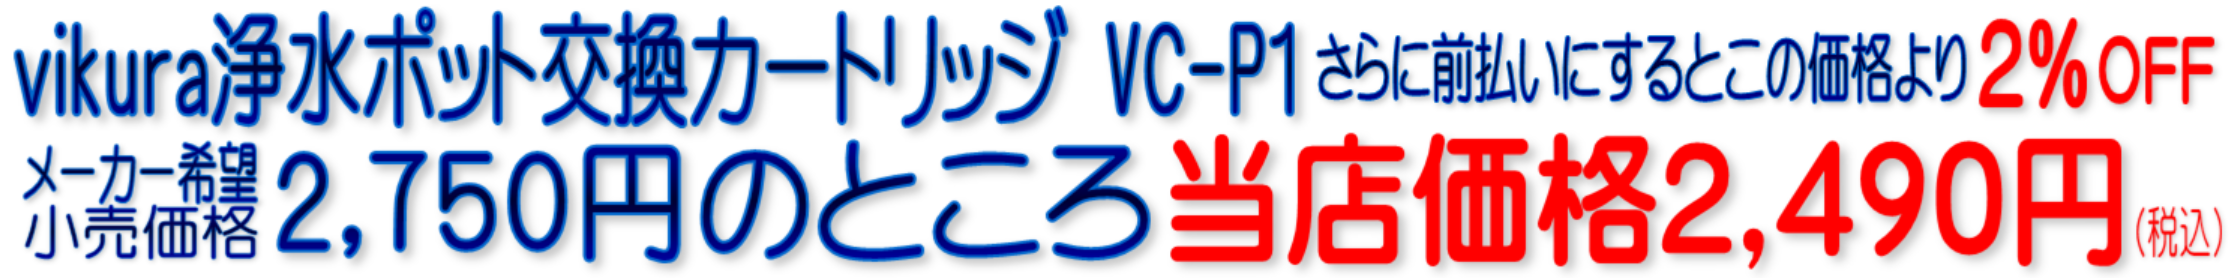 vikura浄水ポット ビクラ浄水ポット VF-P1 VC-P1